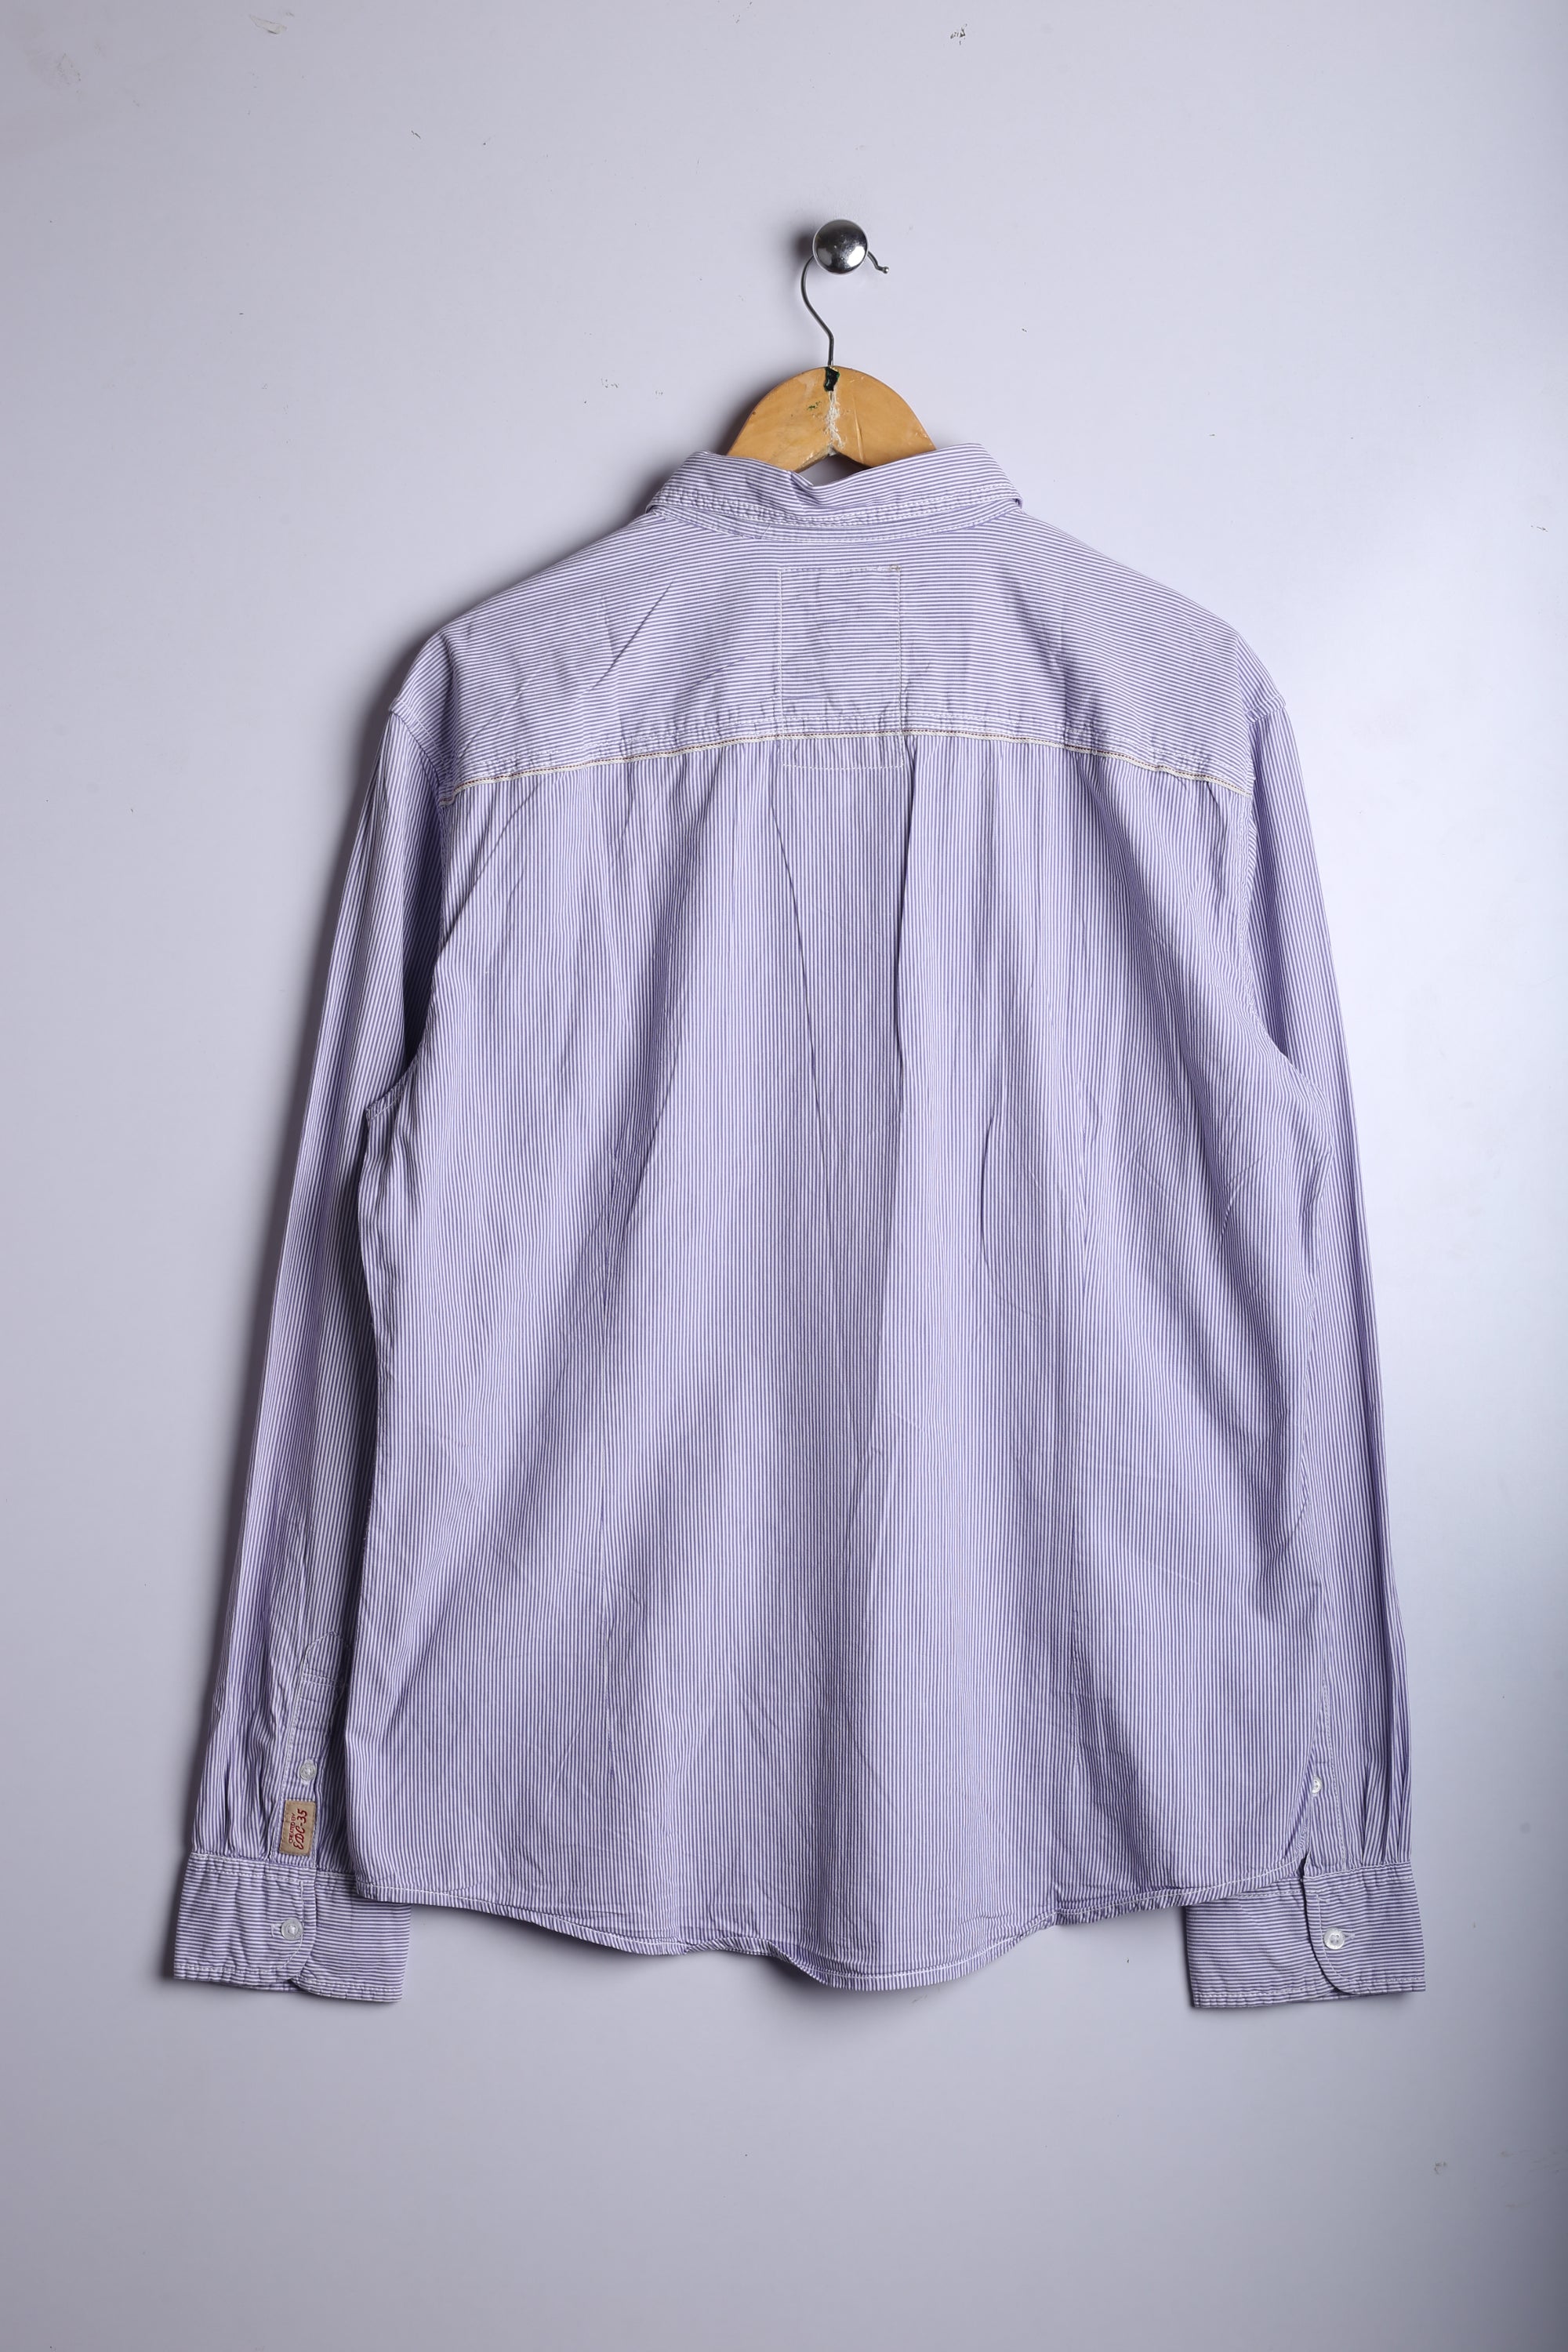 Vintage EDC Brand Shirt Blue/Stripe - Cotton